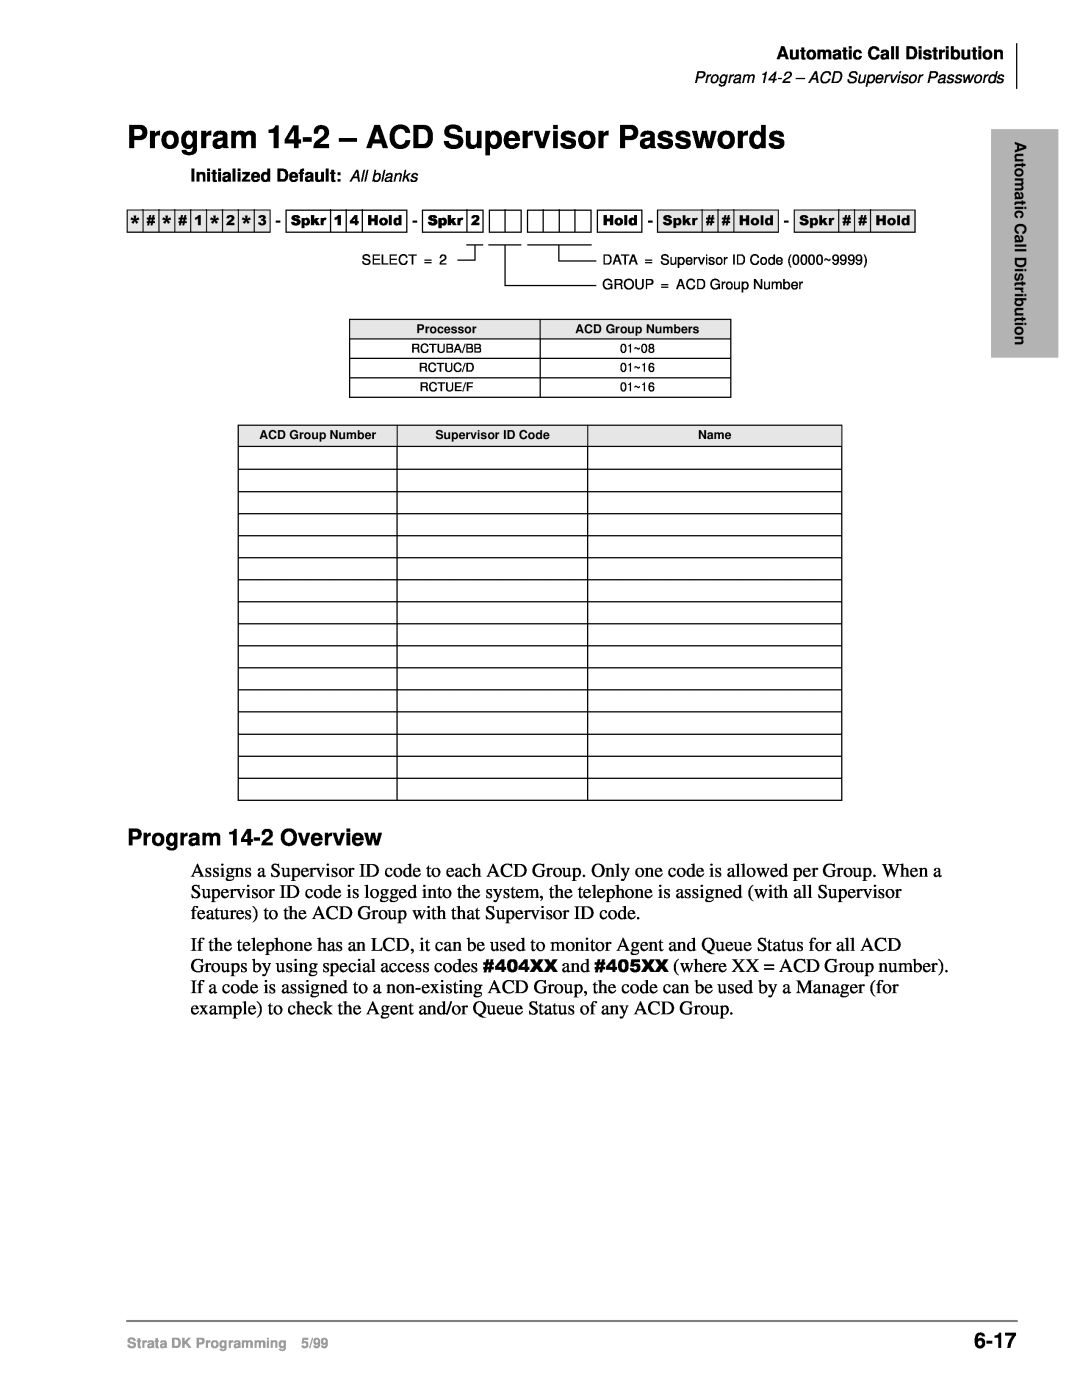 Toshiba dk14 manual Program 14-2– ACD Supervisor Passwords, Program 14-2Overview, 6-17 